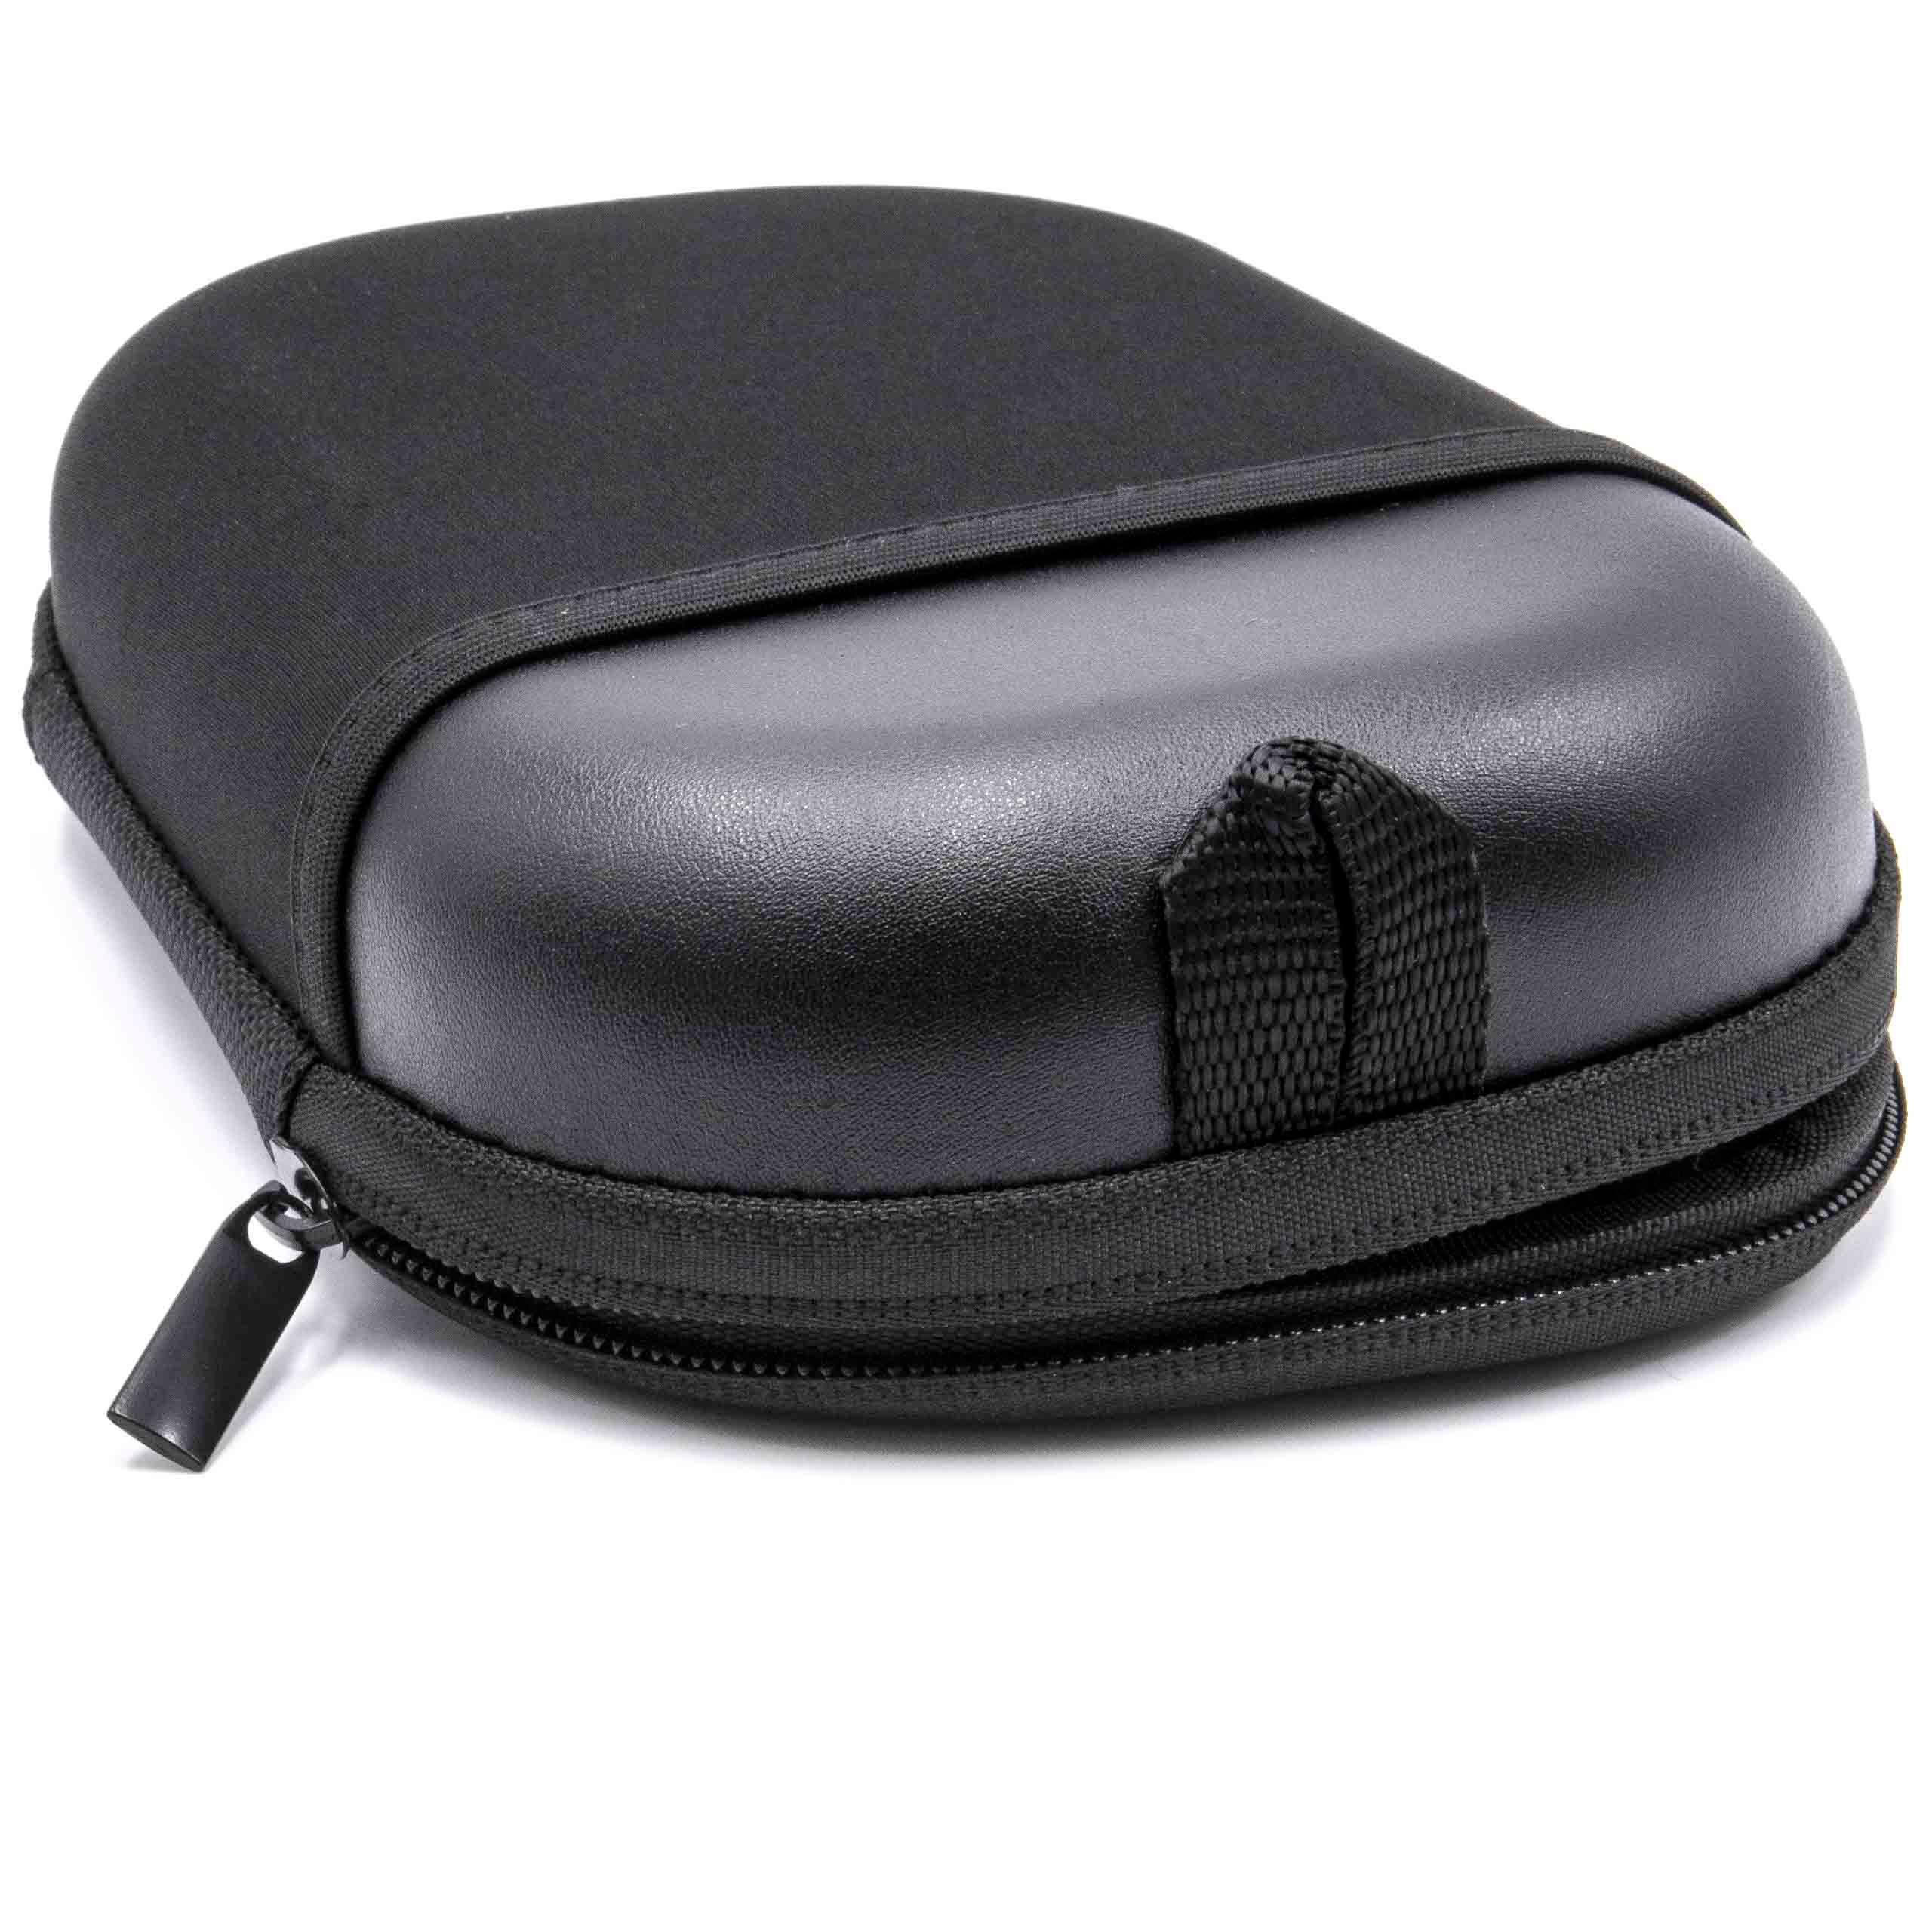 Transport Case suitable for Bose QuietComfort Headphones, Headset - Bag, ethylene vinyl acetate (EVA), black